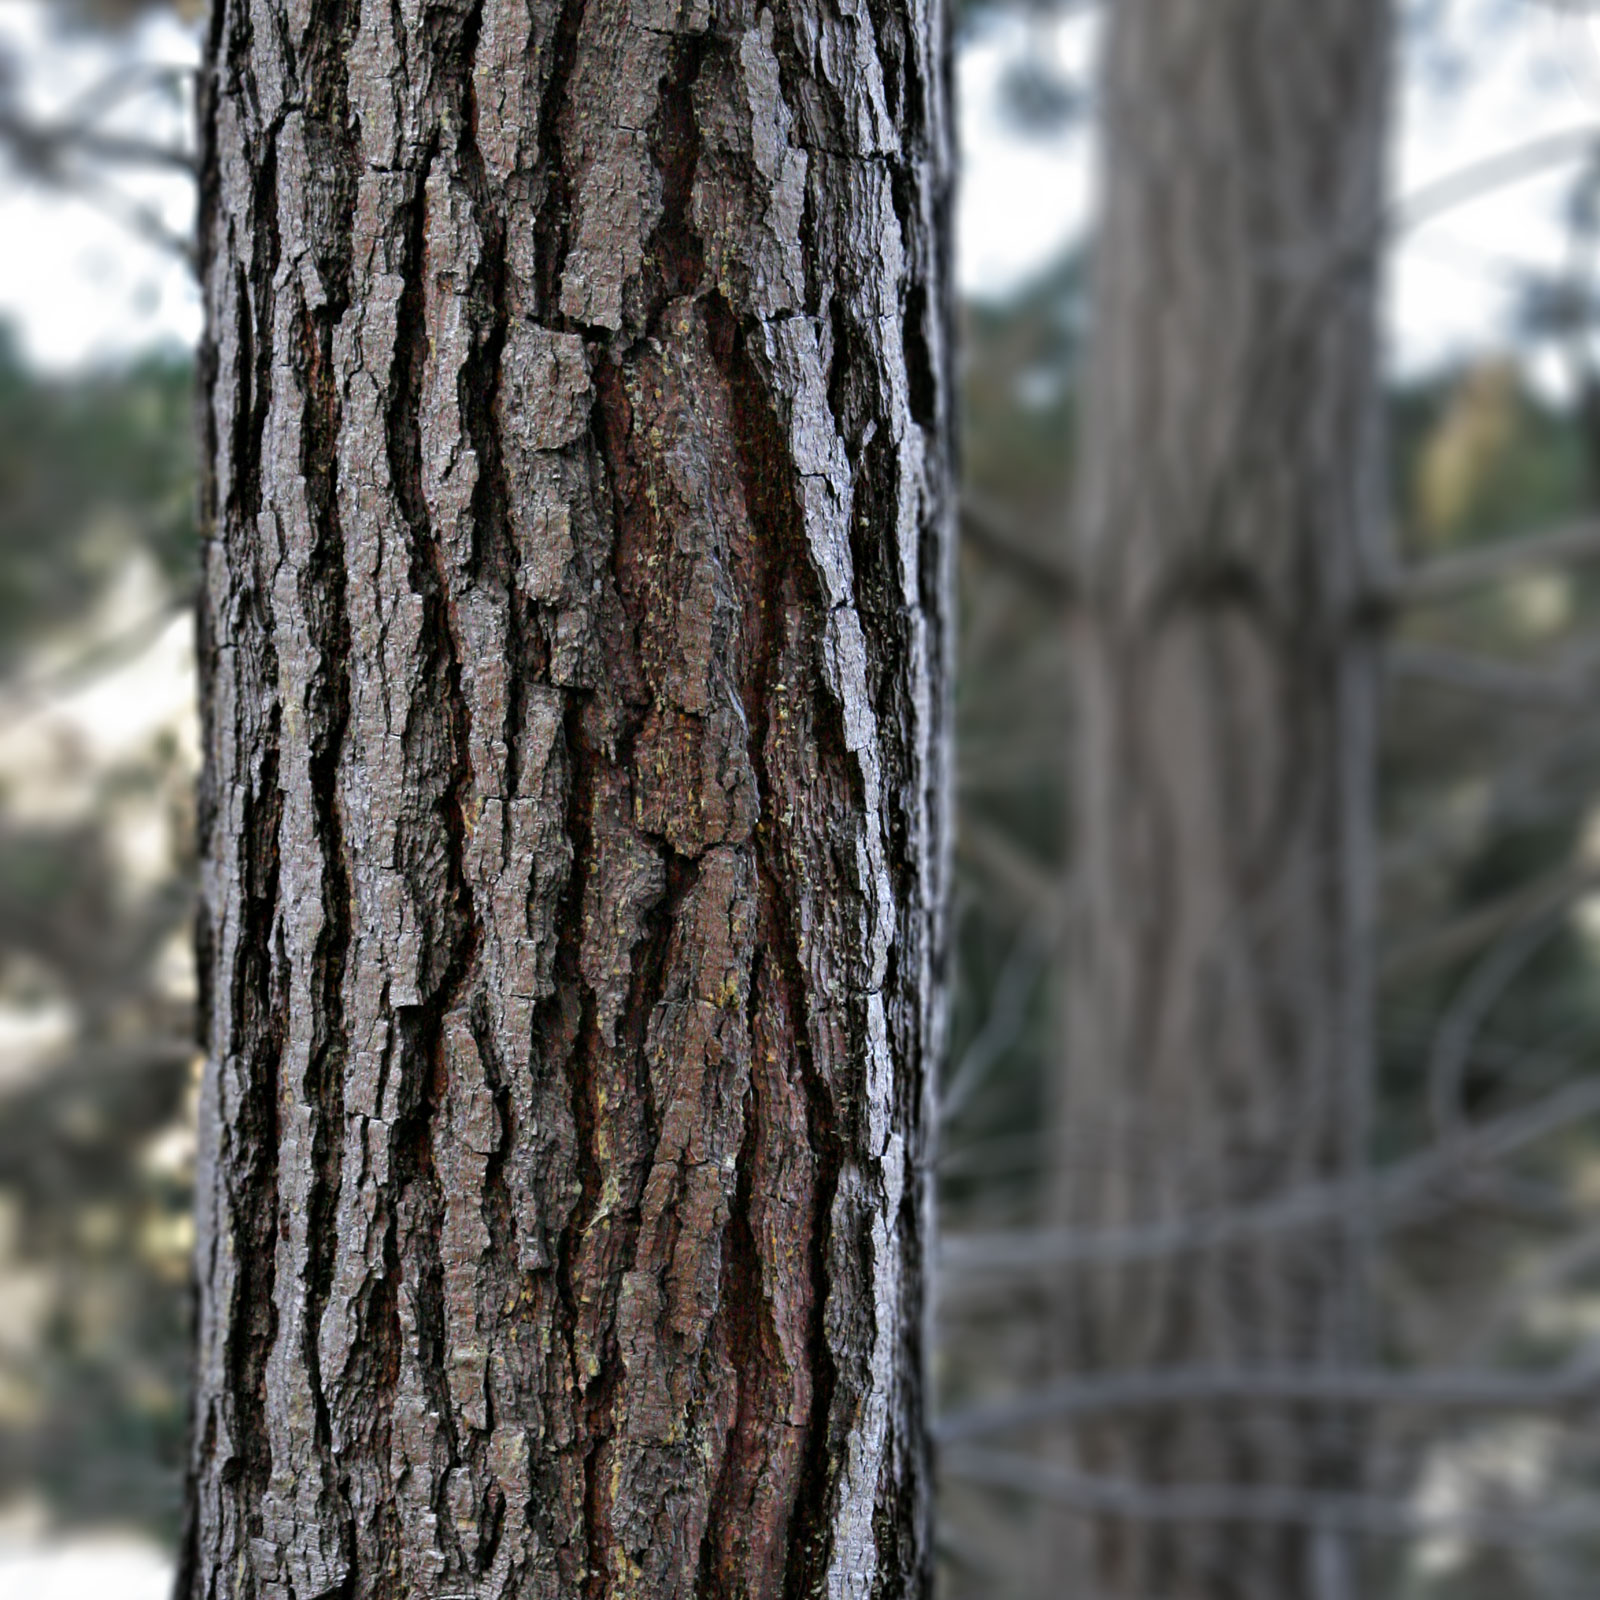 File:Pine bark.jpg - Wikipedia